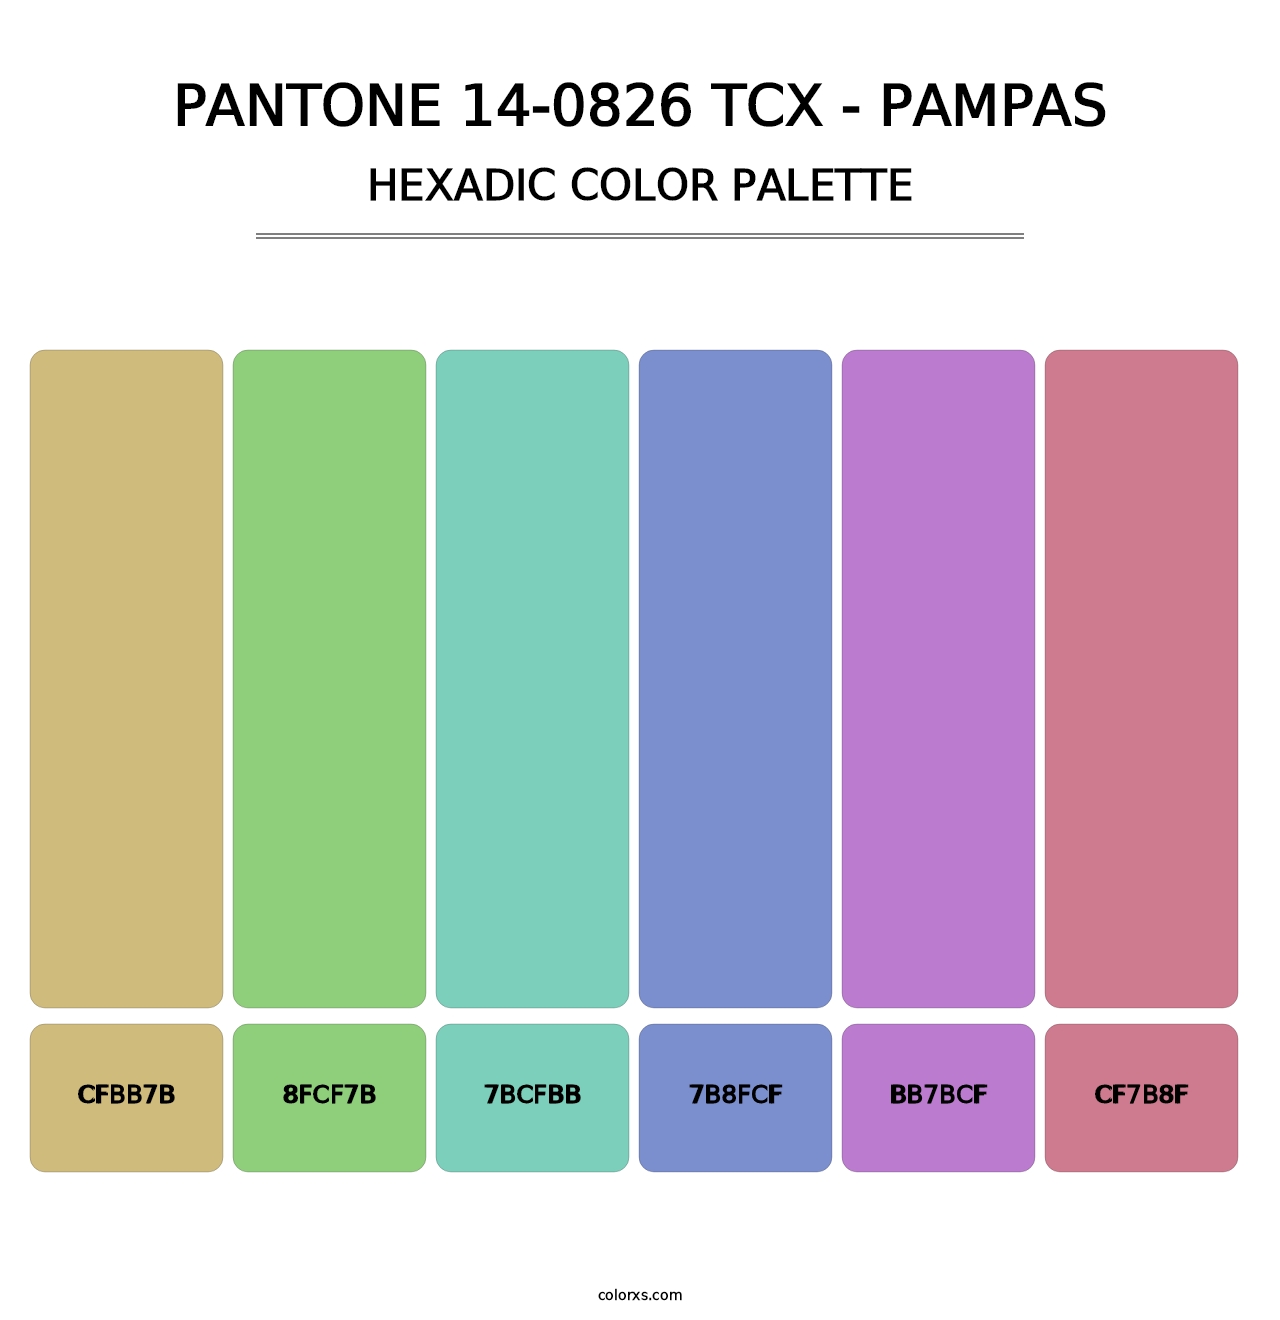 PANTONE 14-0826 TCX - Pampas - Hexadic Color Palette